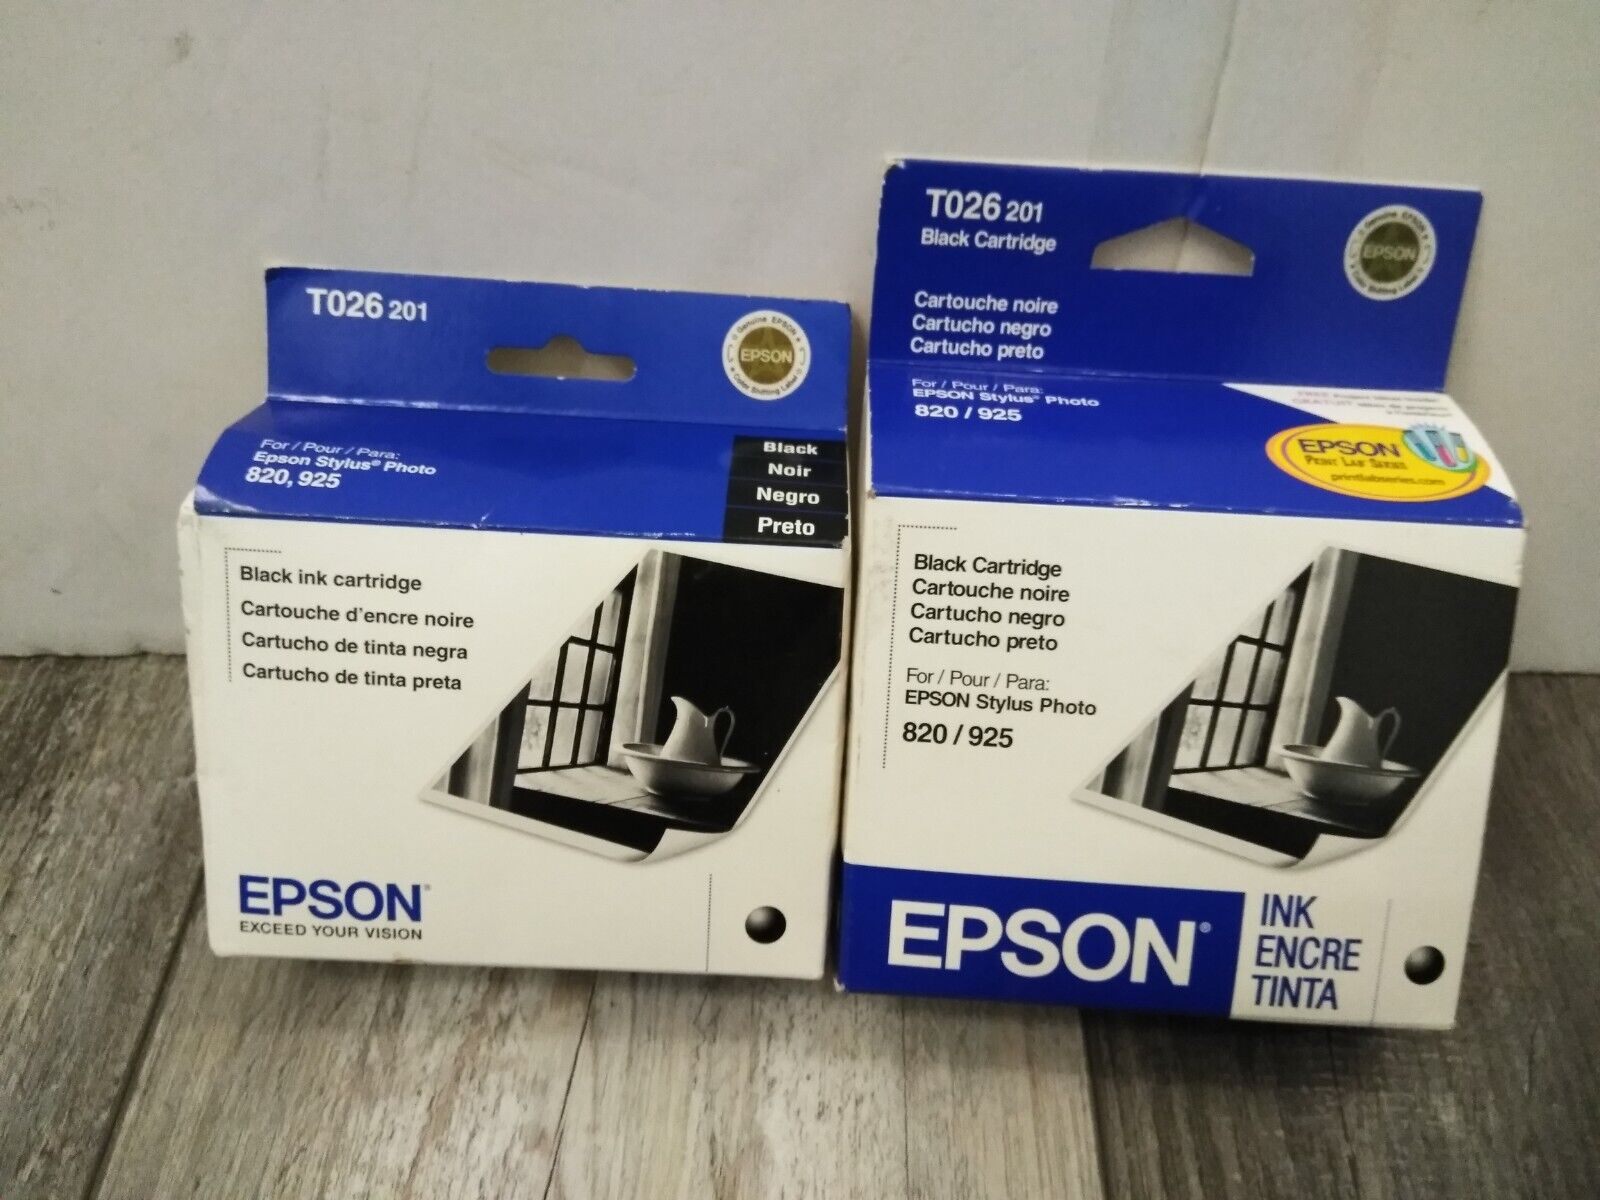 EPSON T026-201 820 / 925 Stylus Photo Black Genuine Ink Cartridge (2PK BUNDLE)